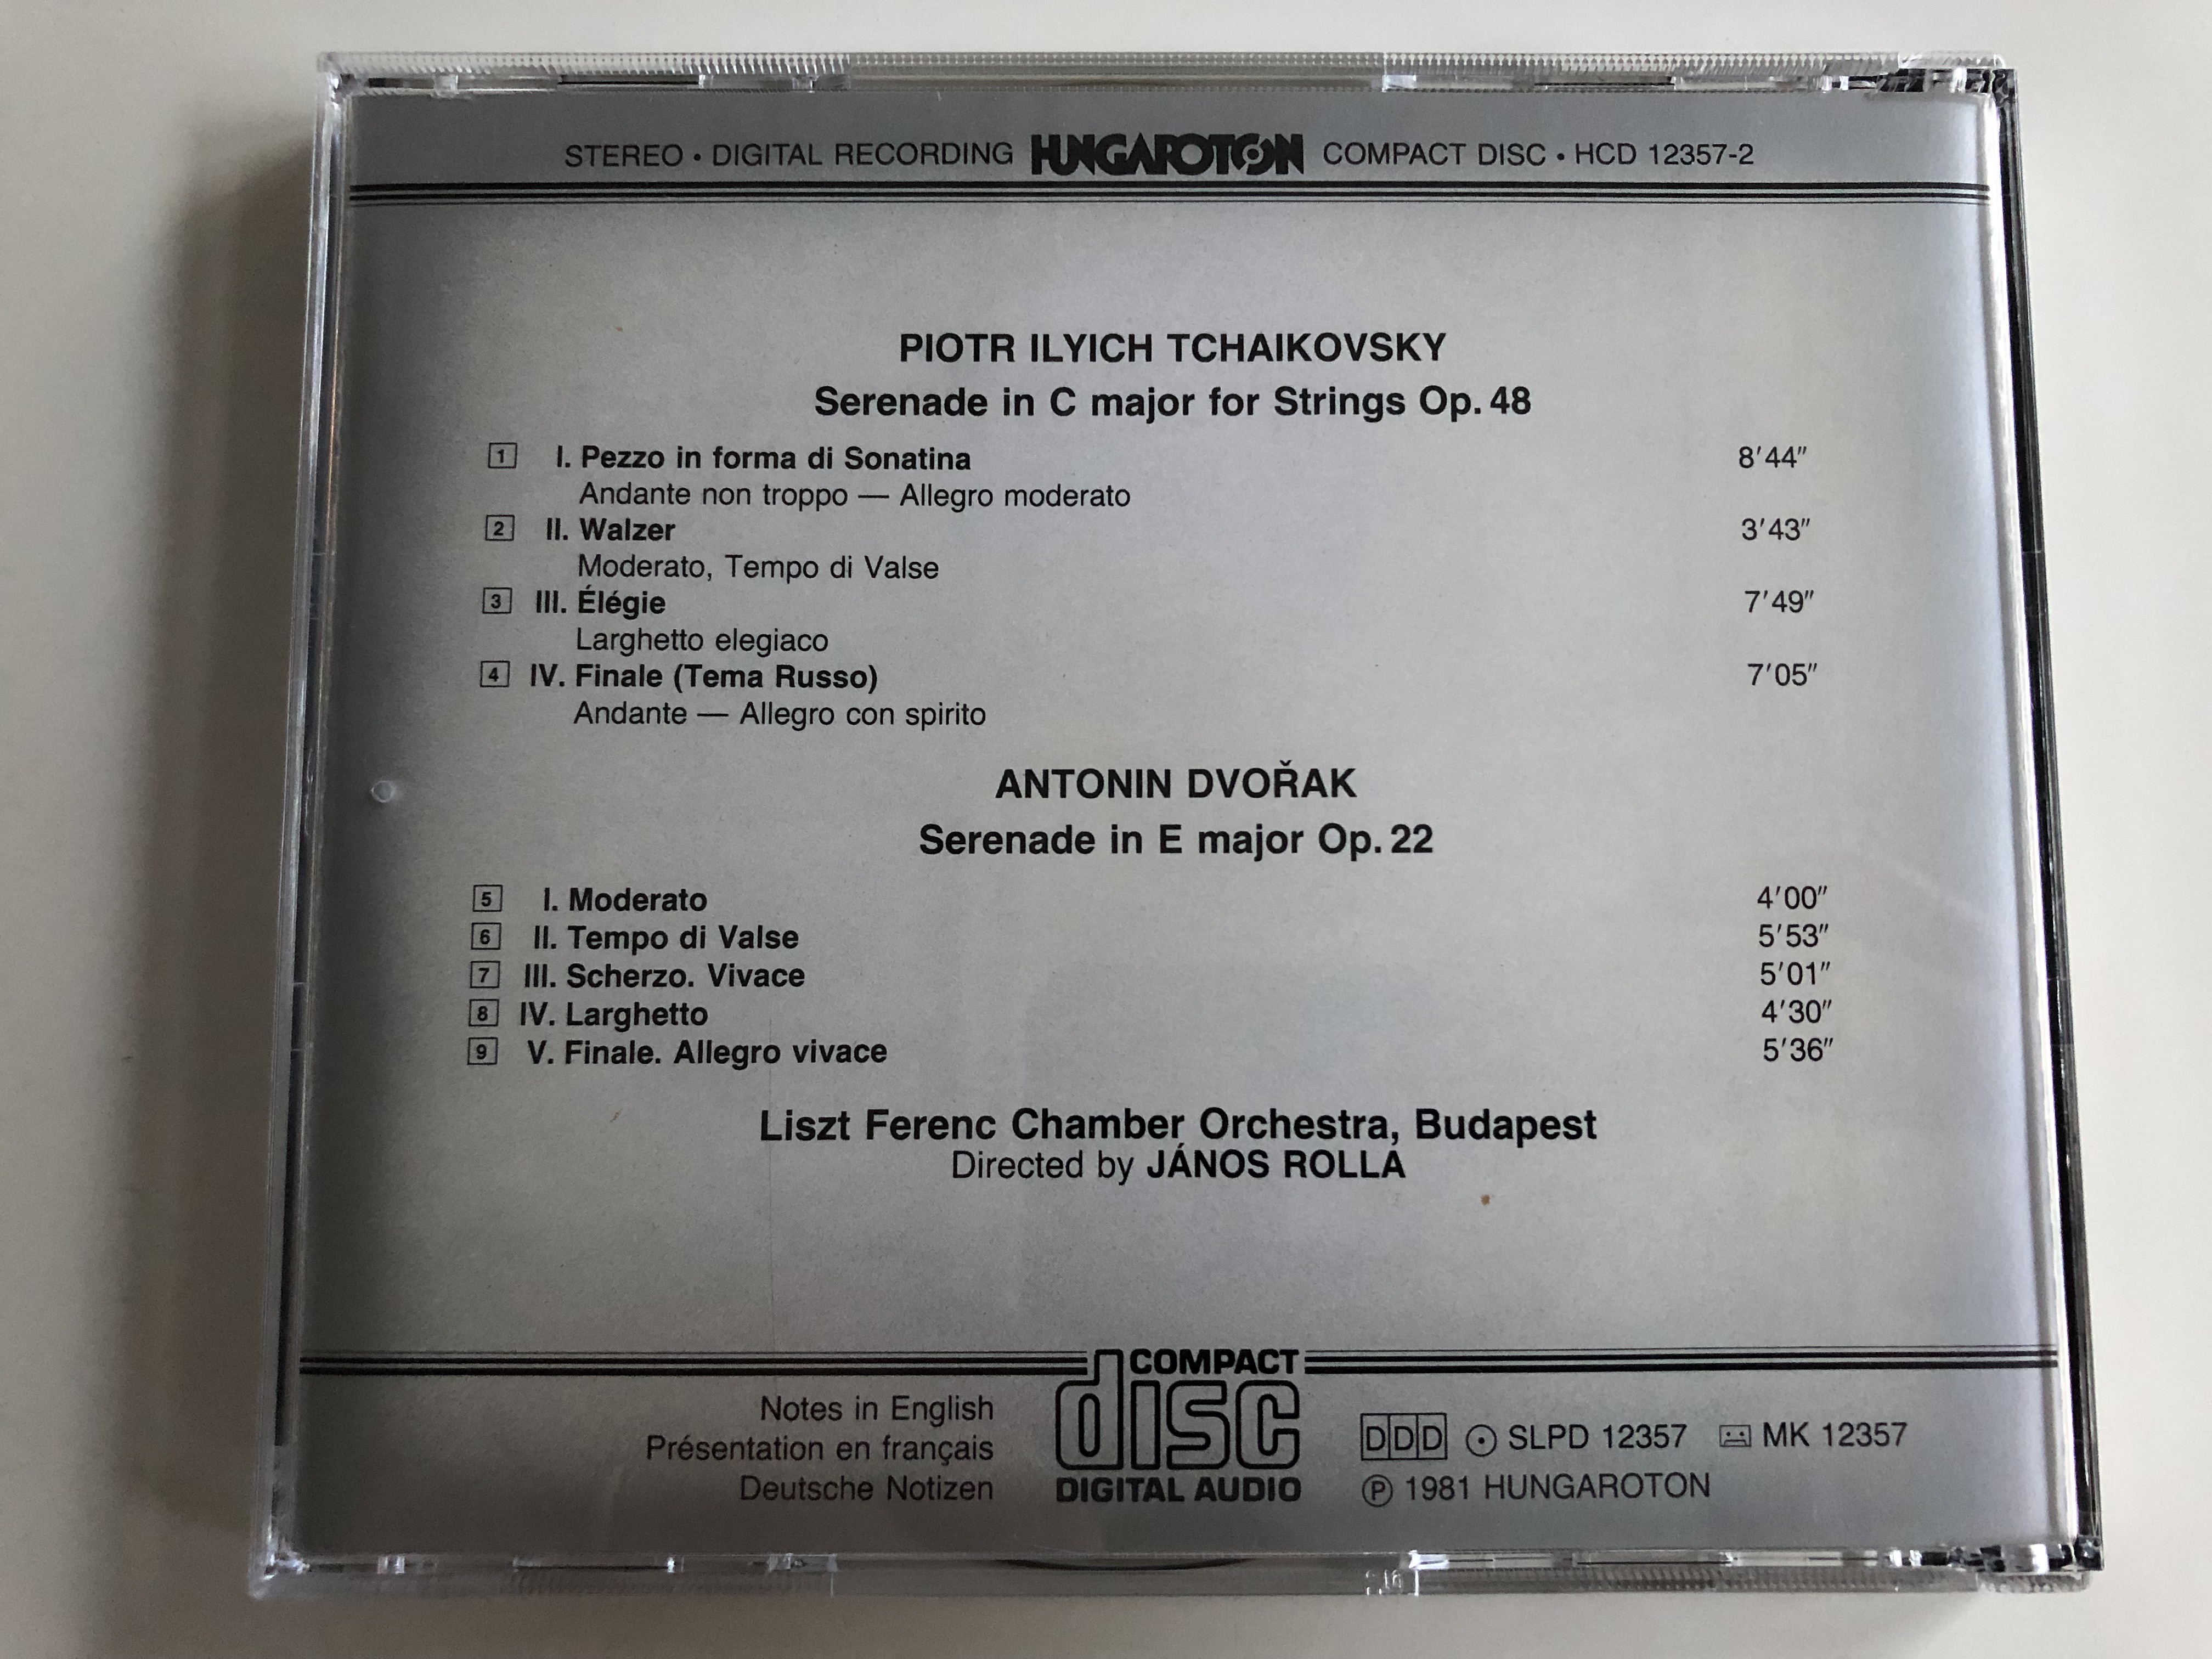 serenades-tchaikovsky-dvor-k-liszt-ferenc-chamber-orchestra-budapest-conducted-by-j-nos-rolla-hungaroton-audio-cd-1981-hcd-12357-2-7-.jpg